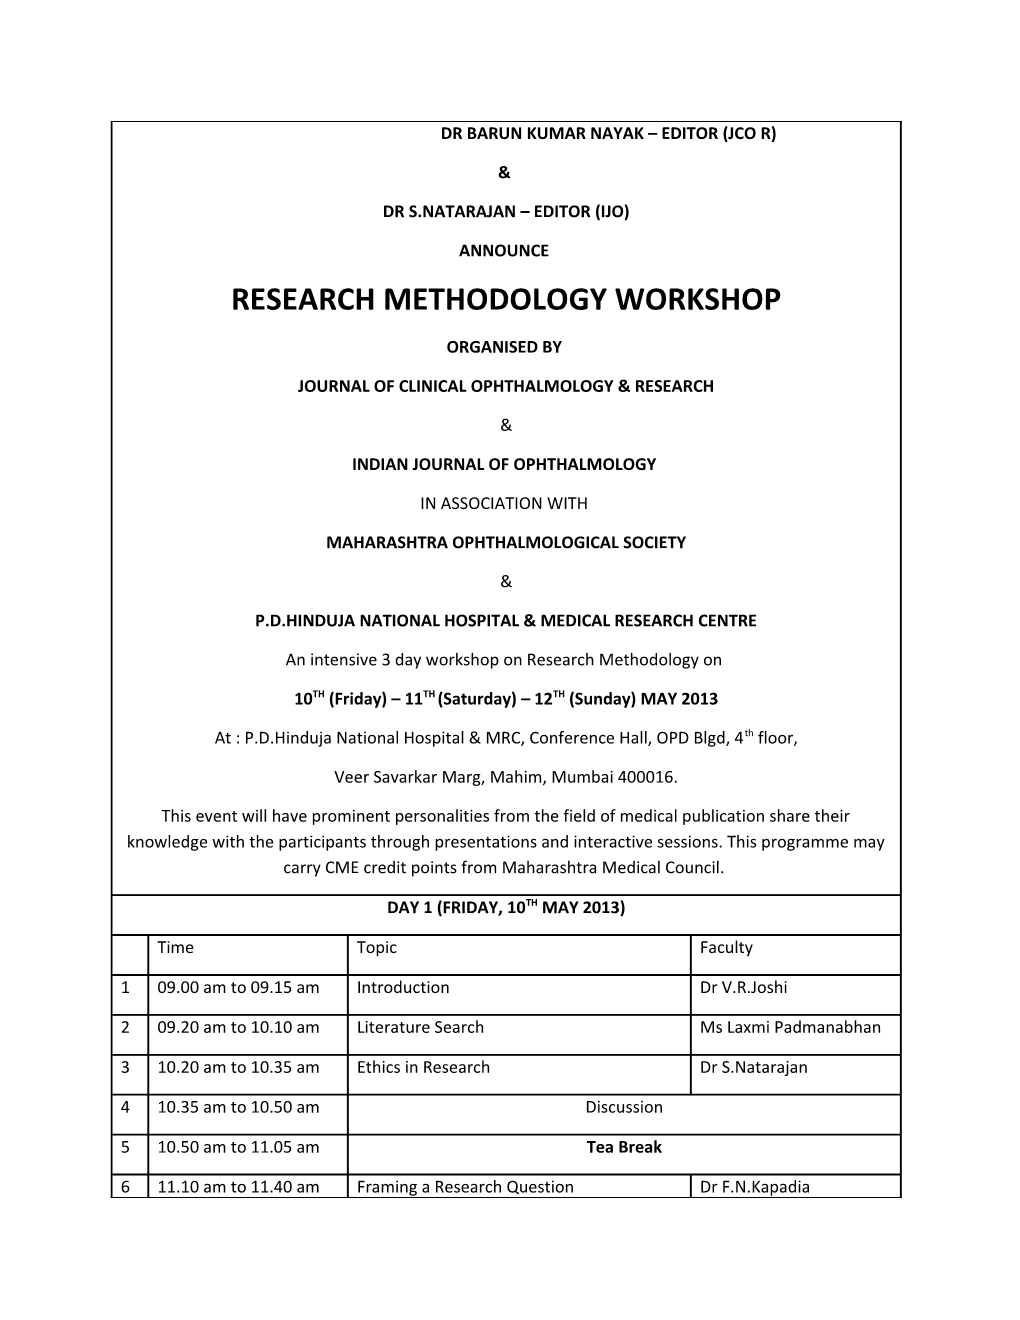 Research Methodology Workshop